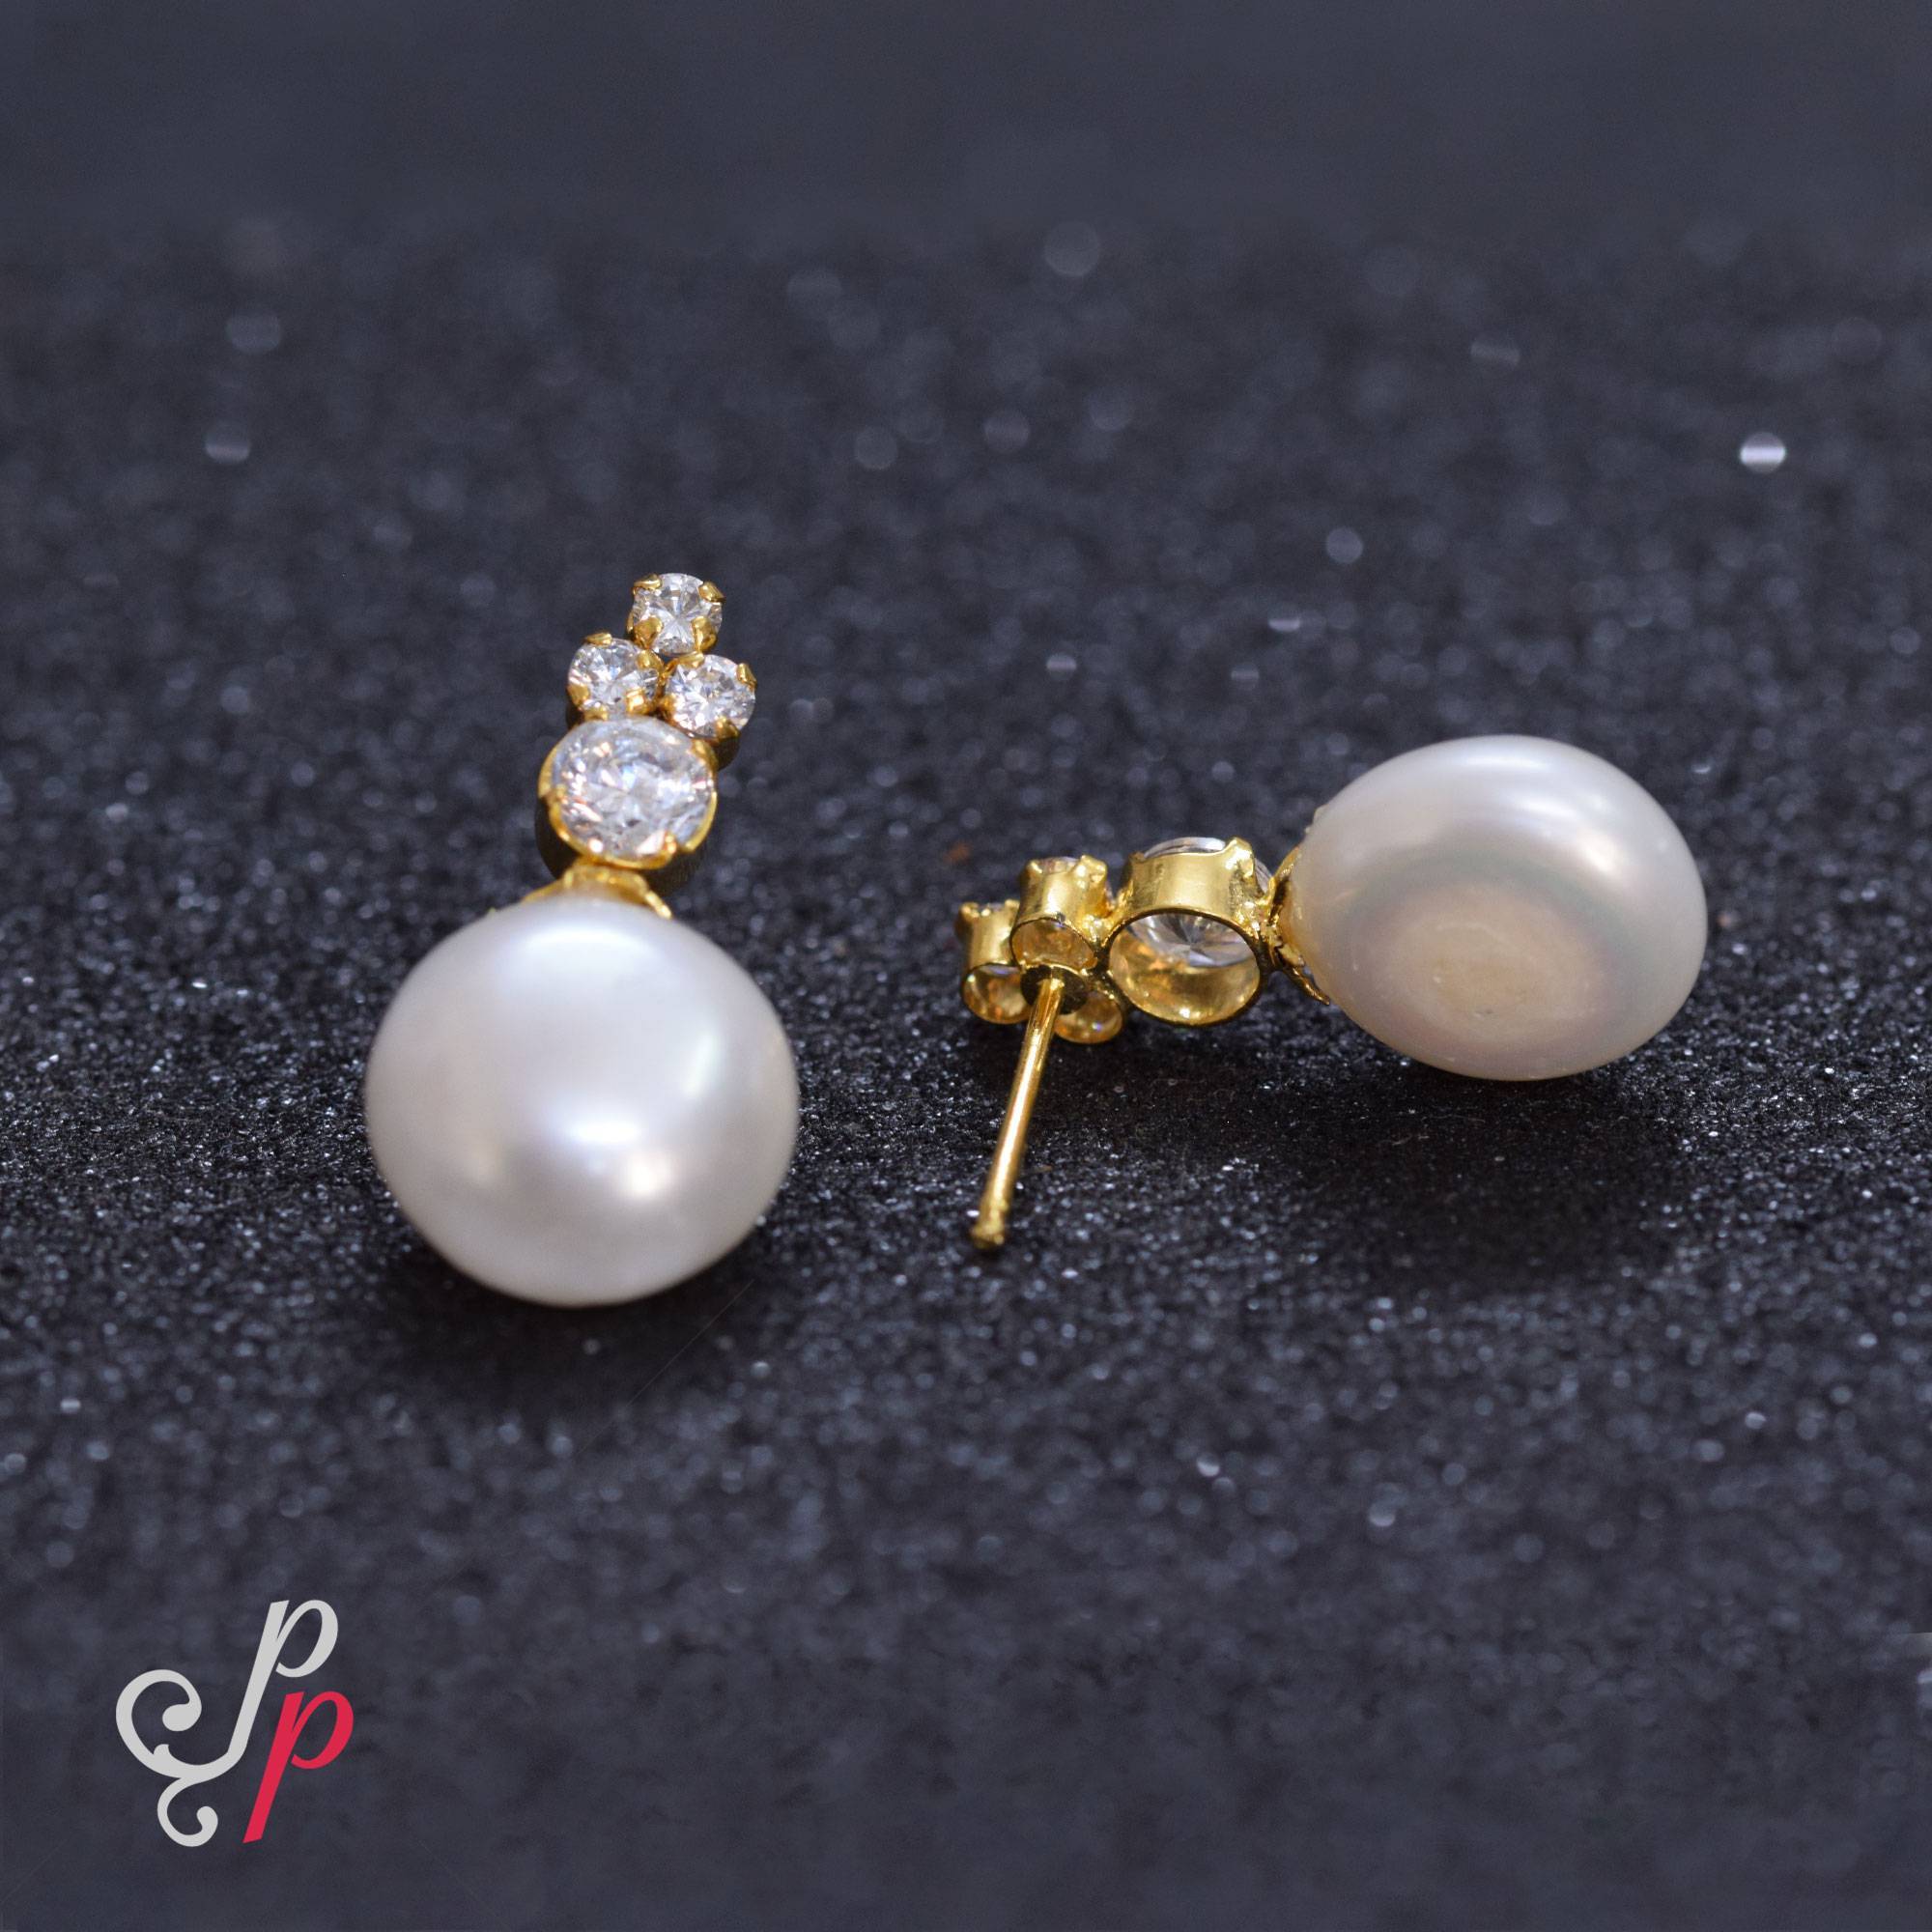 South Sea Pearl and Diamond Earrings (White Gold) — Shreve, Crump & Low